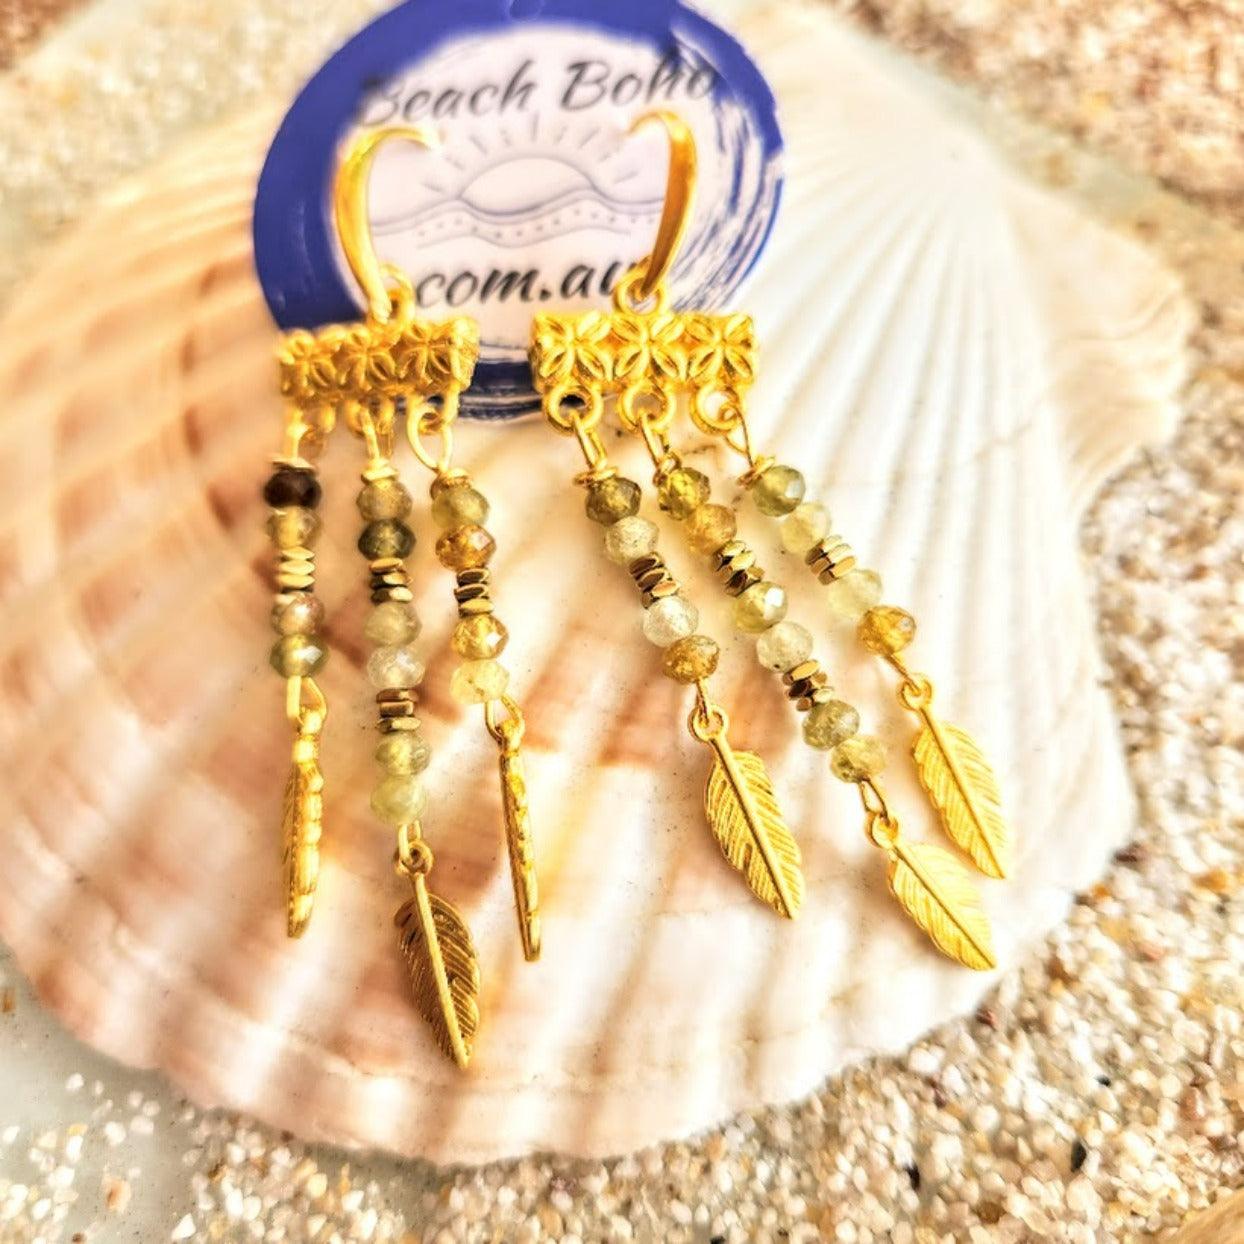 VITAL GREEN - TSAVORITE GOLD EARRINGS - Premium earrings from www.beachboho,com.au - Just $60! Shop now at www.beachboho.com.au